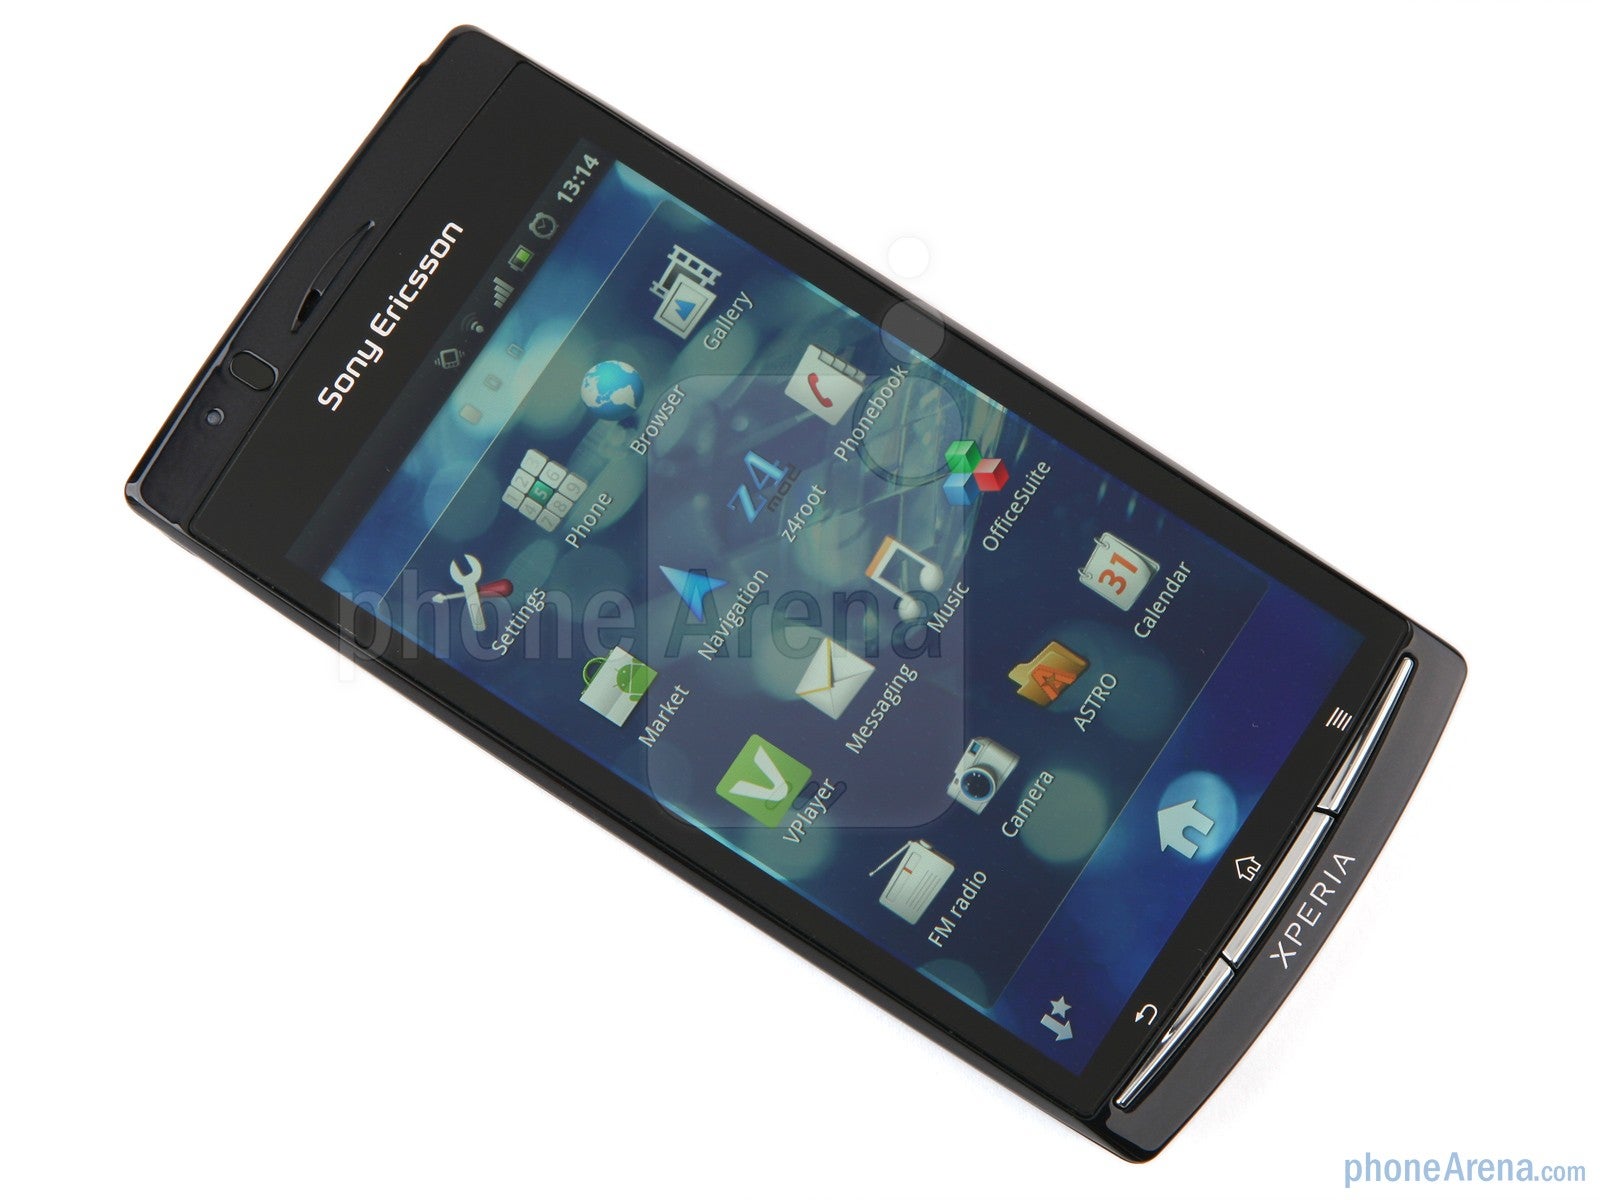 Sony Ericsson Xperia arc Preview